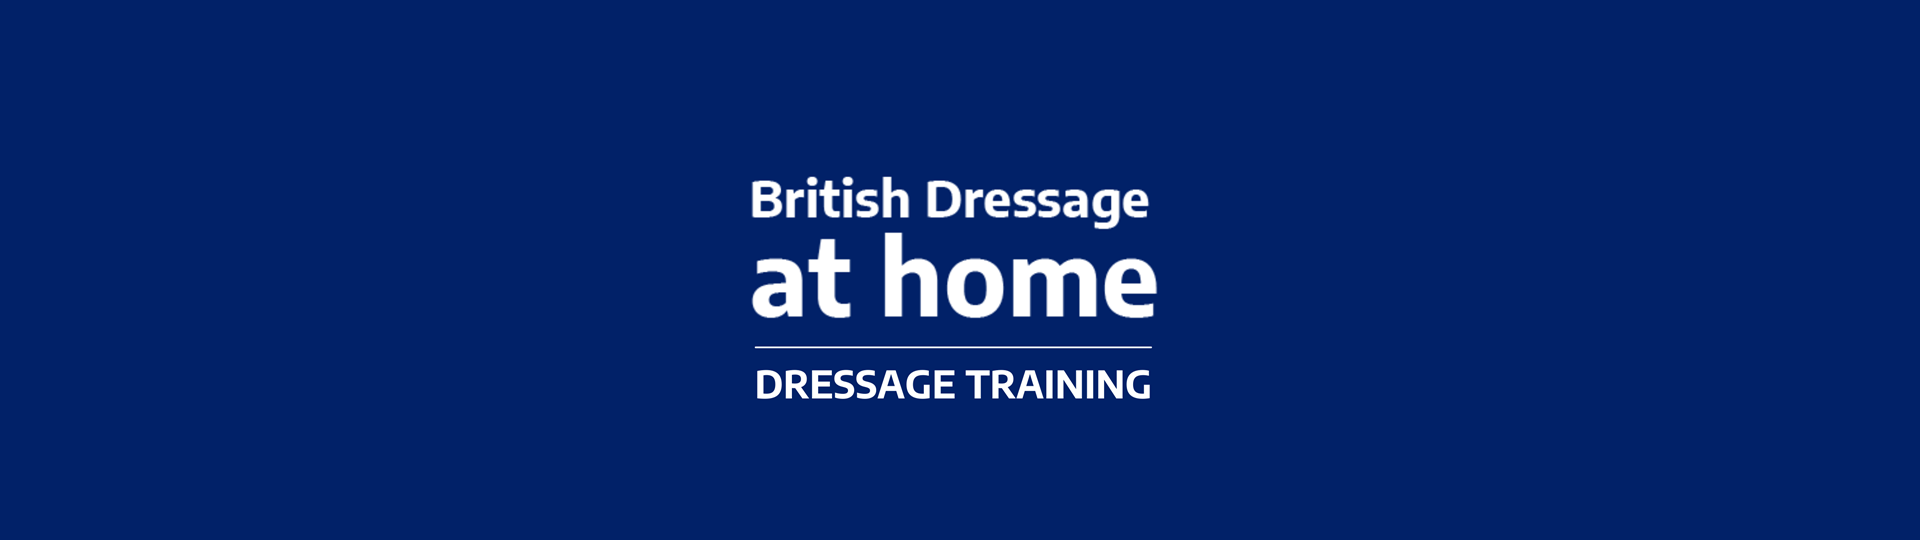 BD At Home Dressage Training Banner